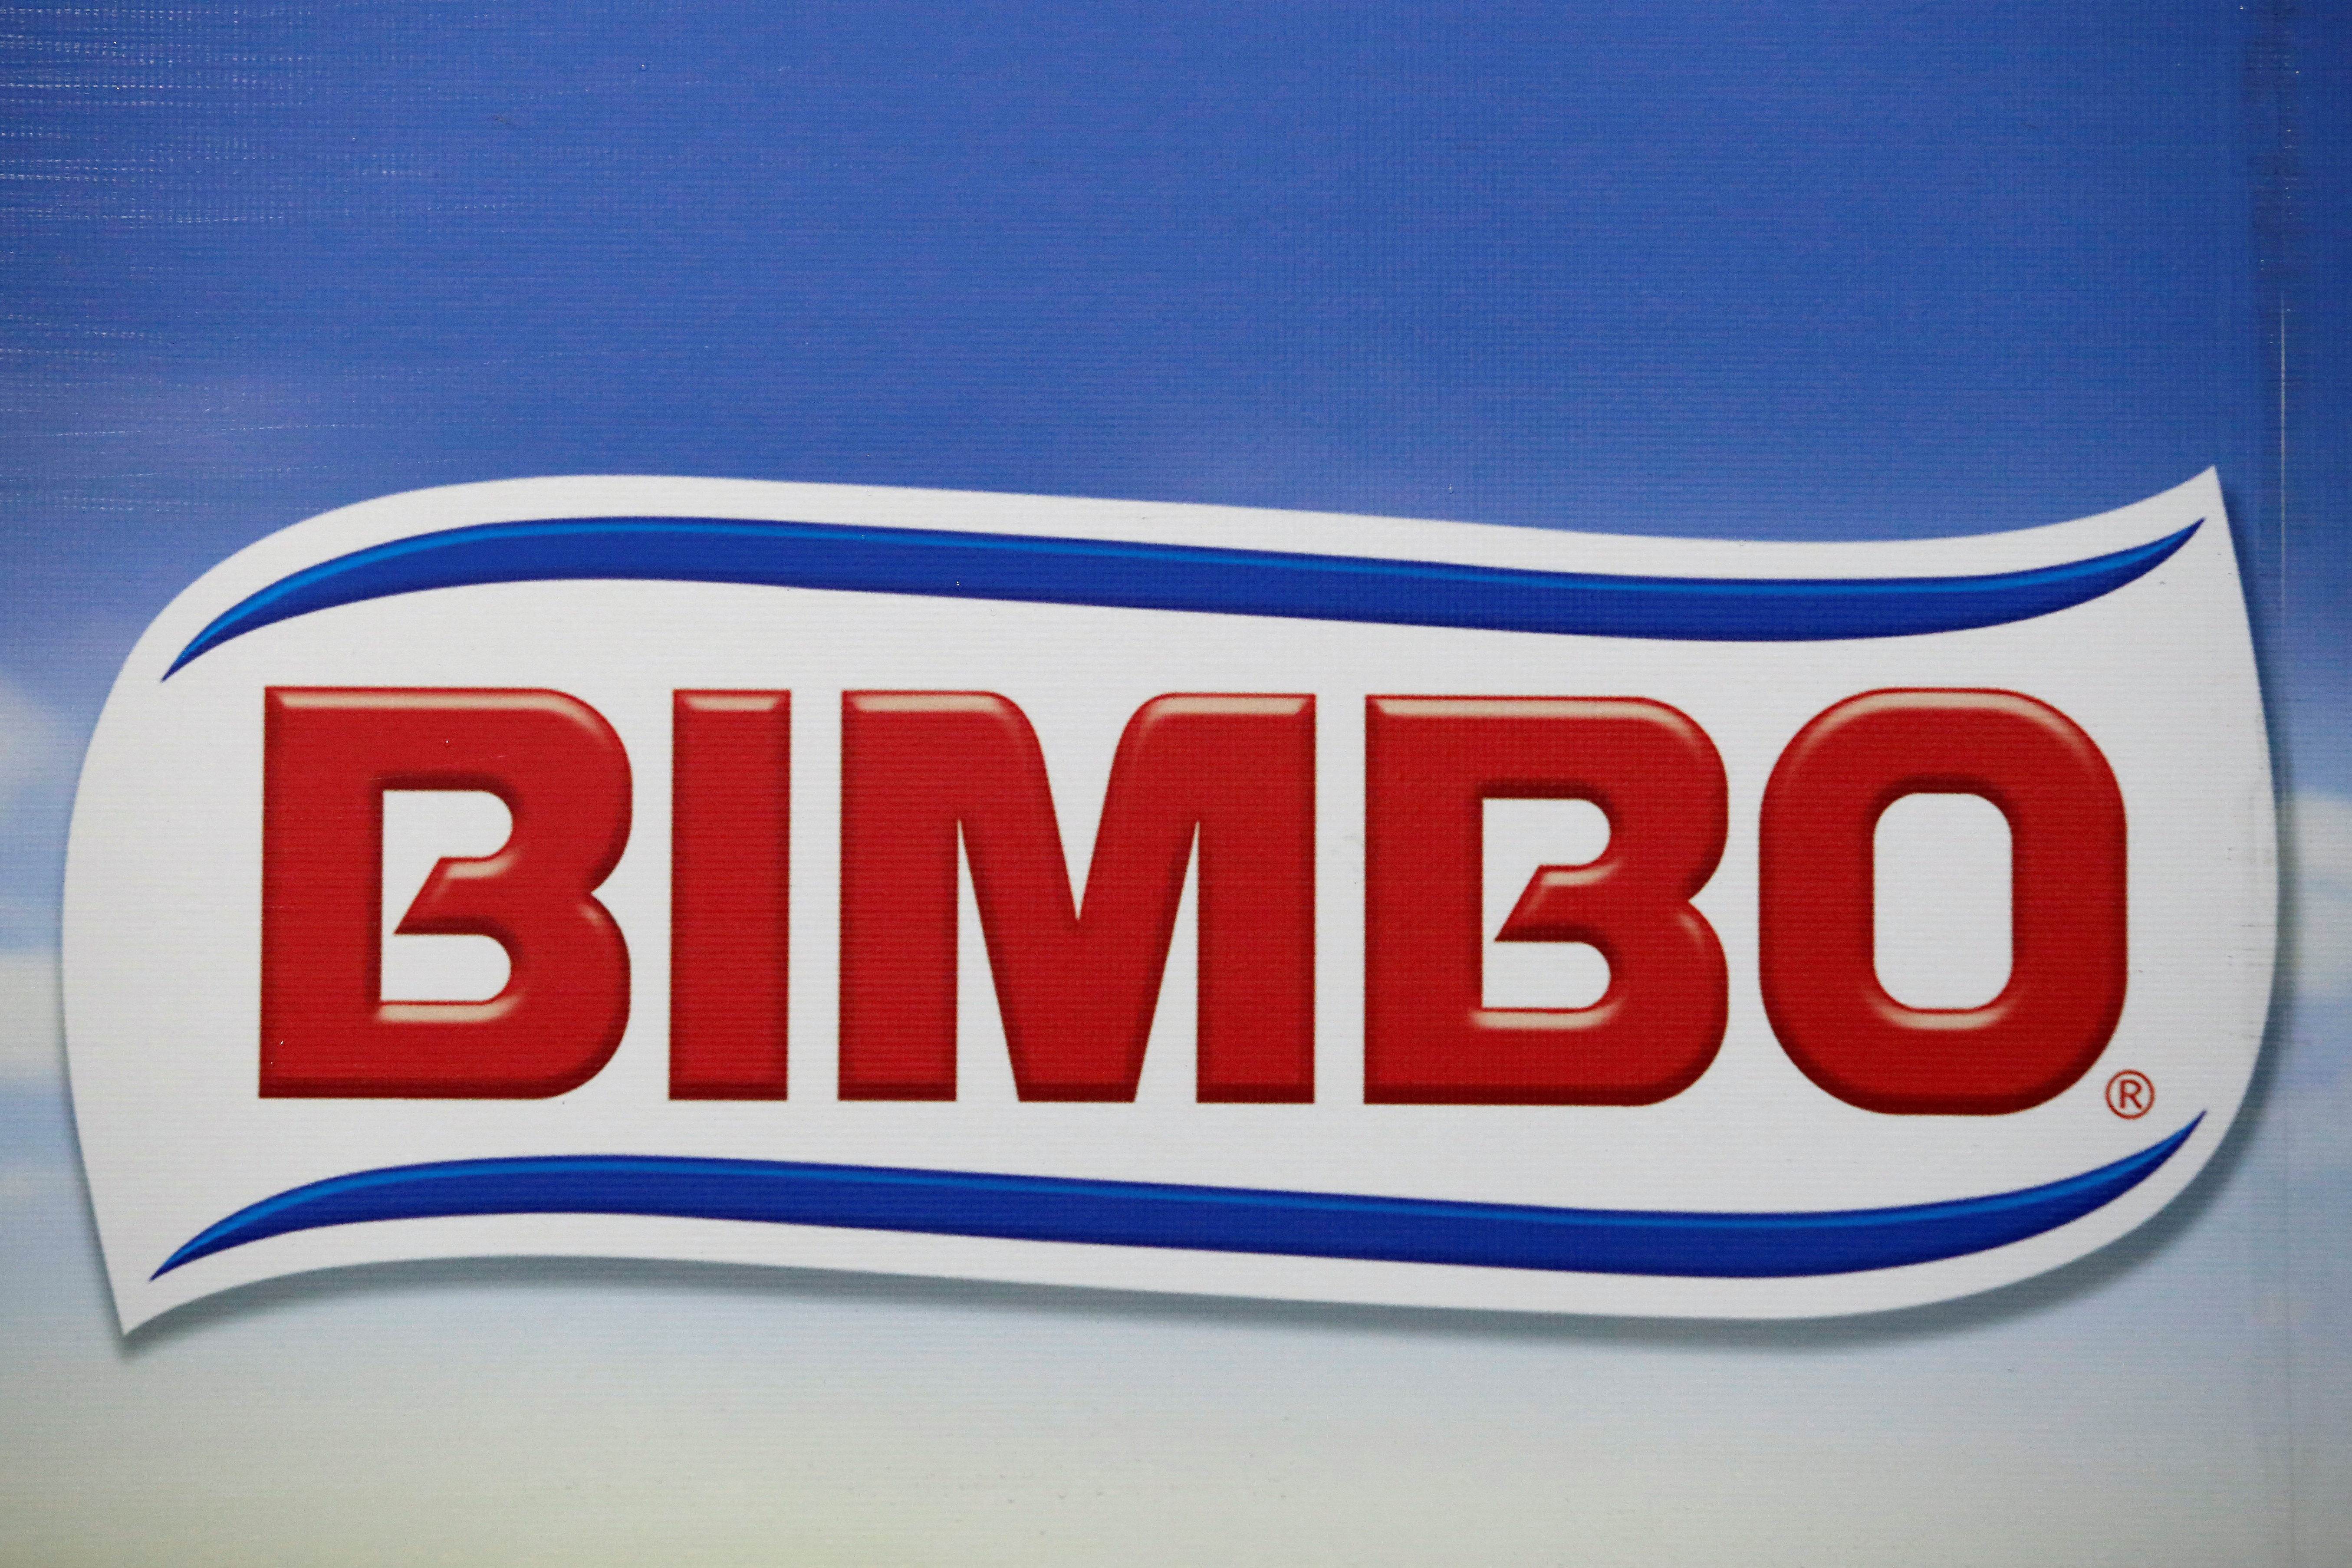 Breadmaker Grupo Bimbo logo is pictured in Monterrey